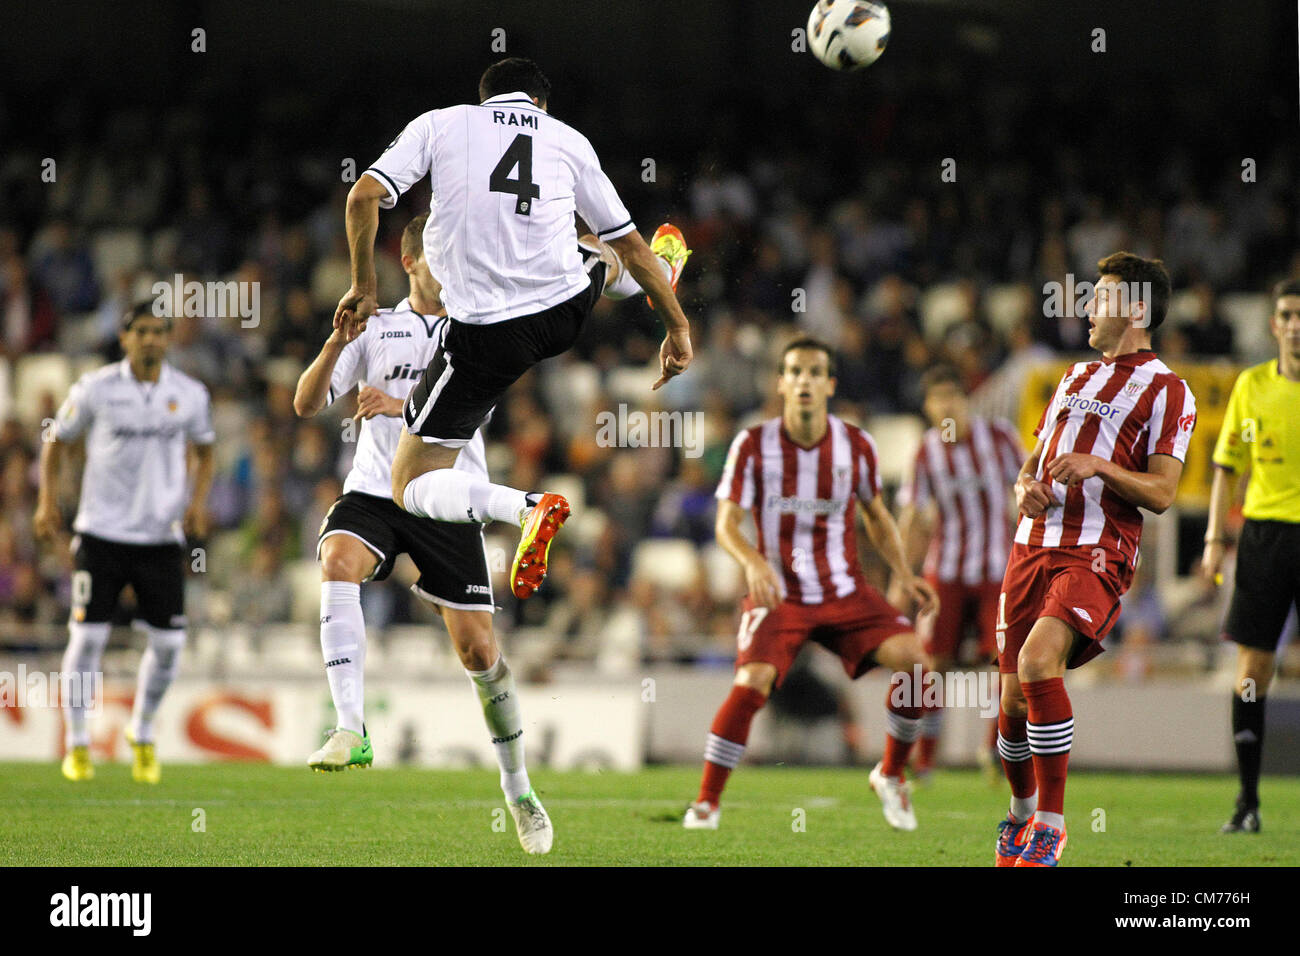 La Liga Spain - Matchday 9 - Valencia CF vs. Ath. Bilbao - Adil Rami, french defense for VAlencia CF kick the ball in defense Stock Photo